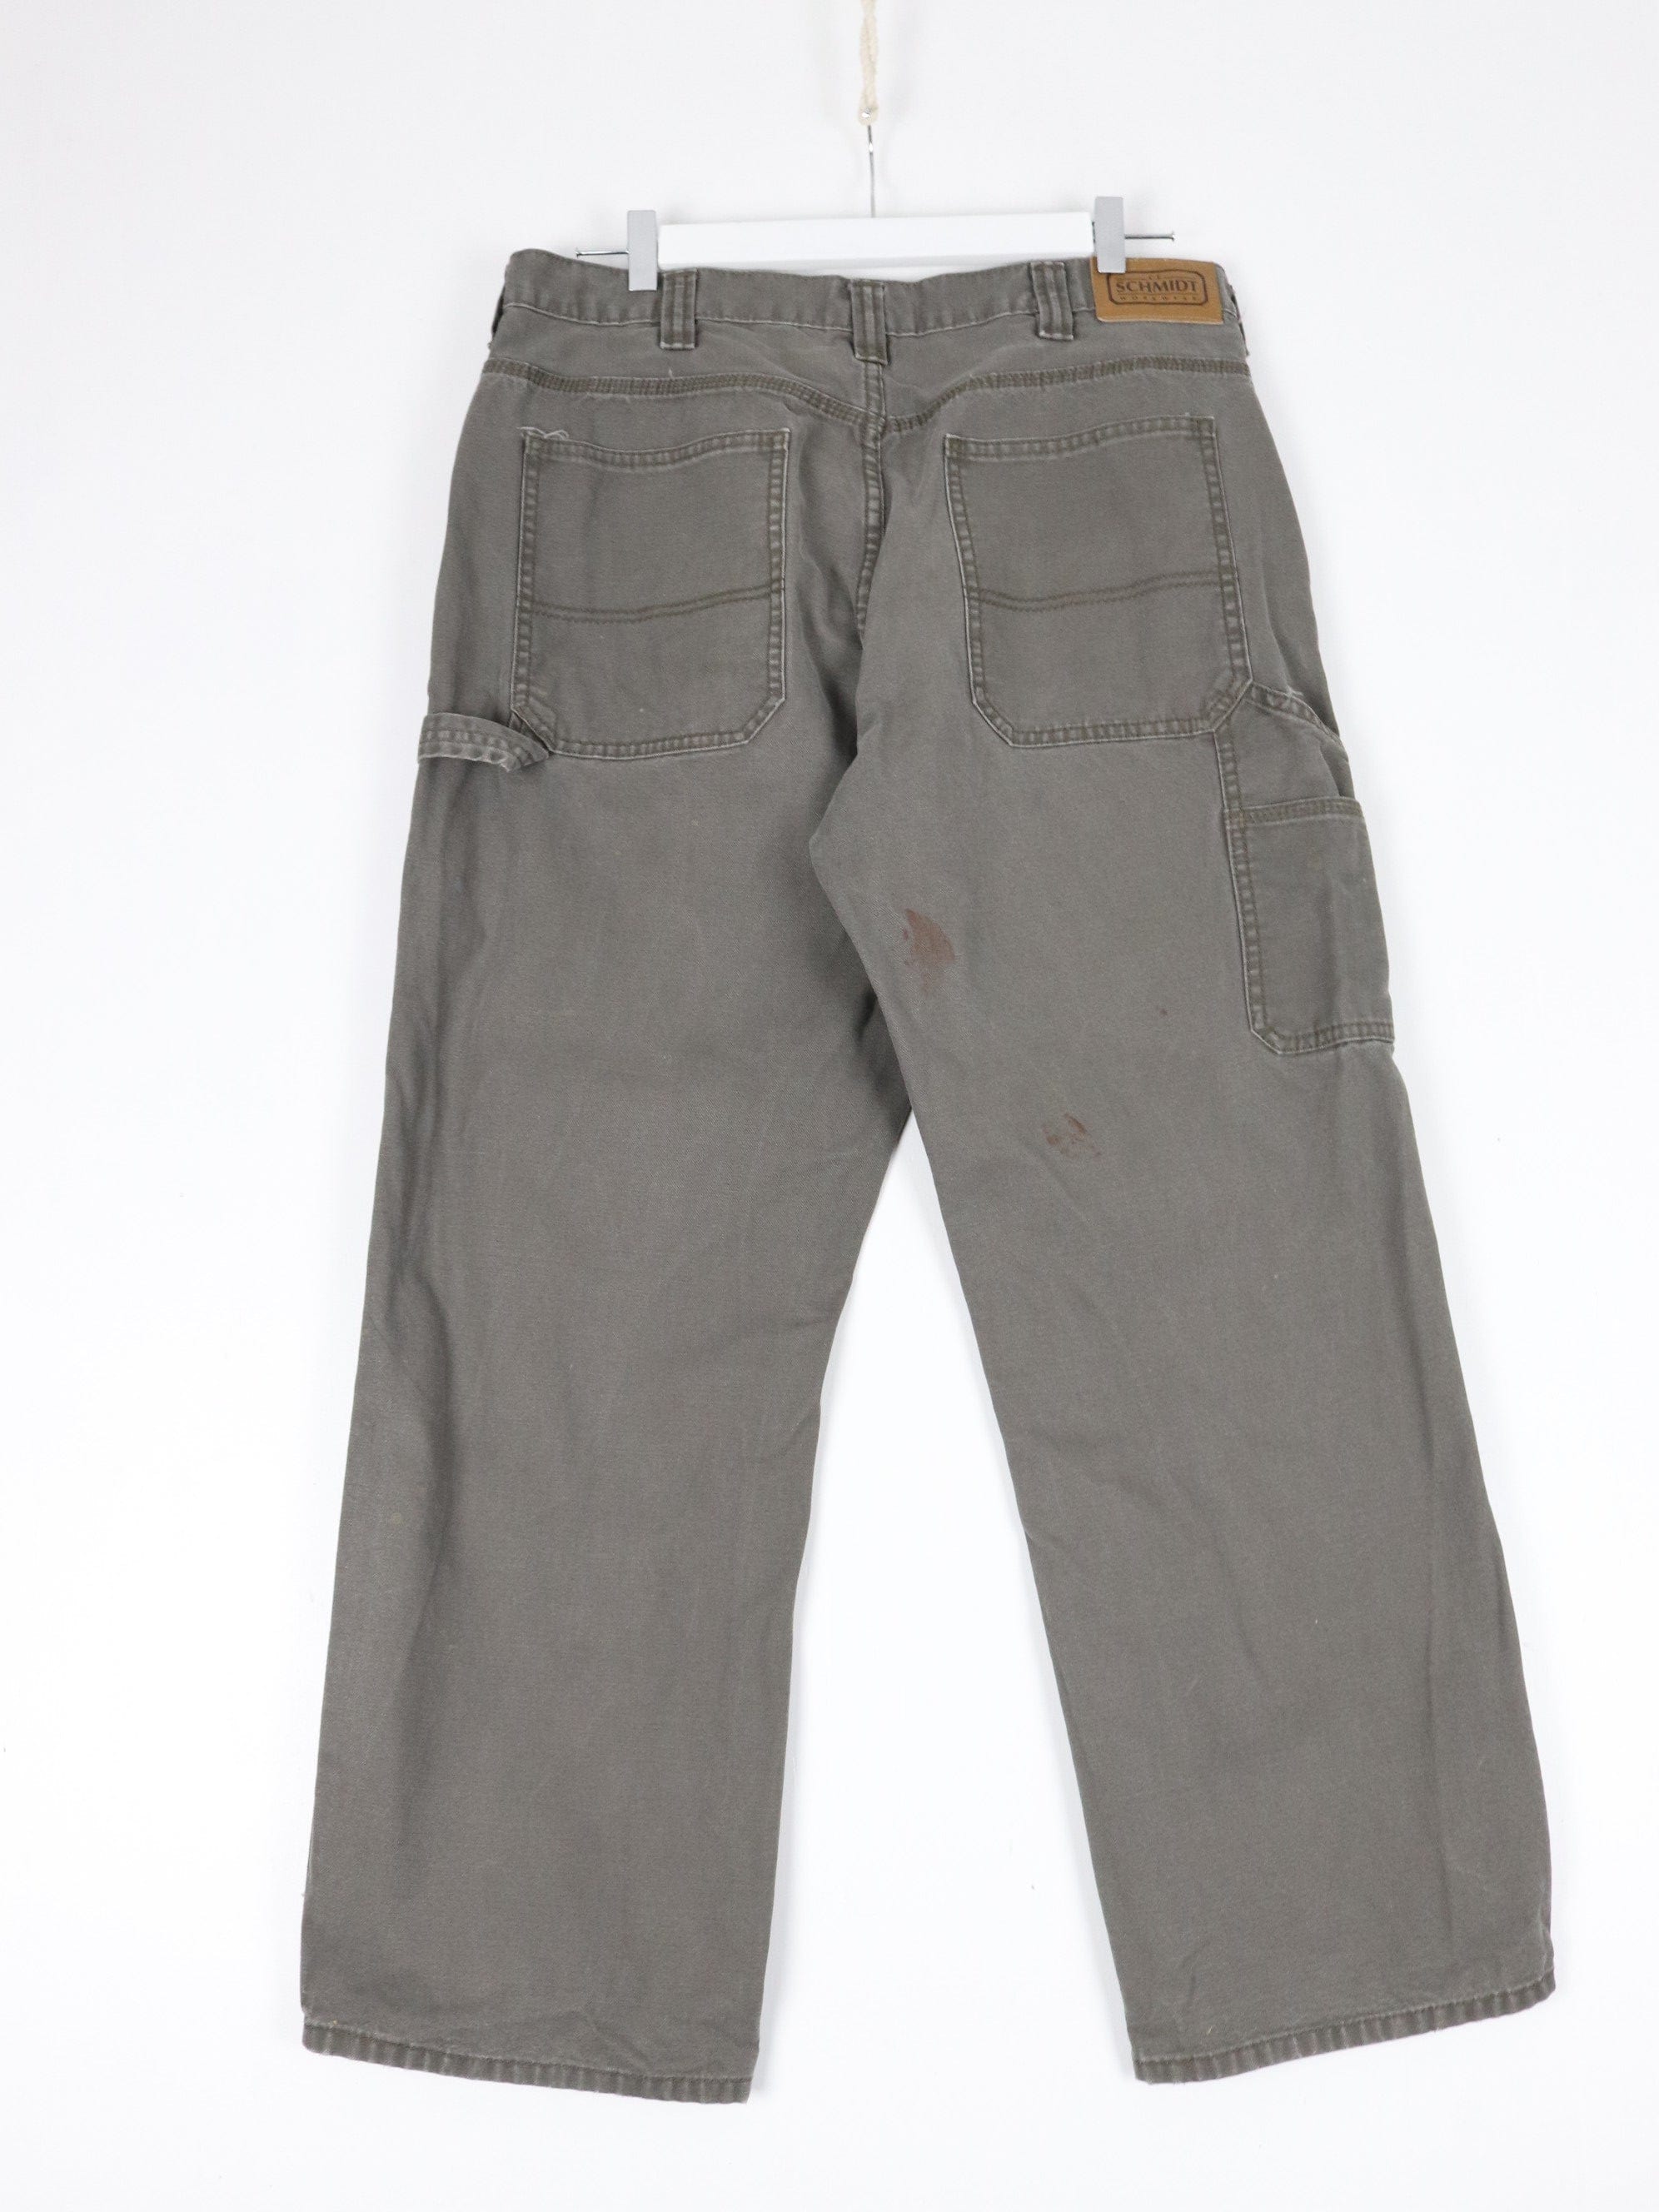 C.E. Schmidt Pants Mens 34 x 30 Fleece Lined Work Wear – Proper Vintage